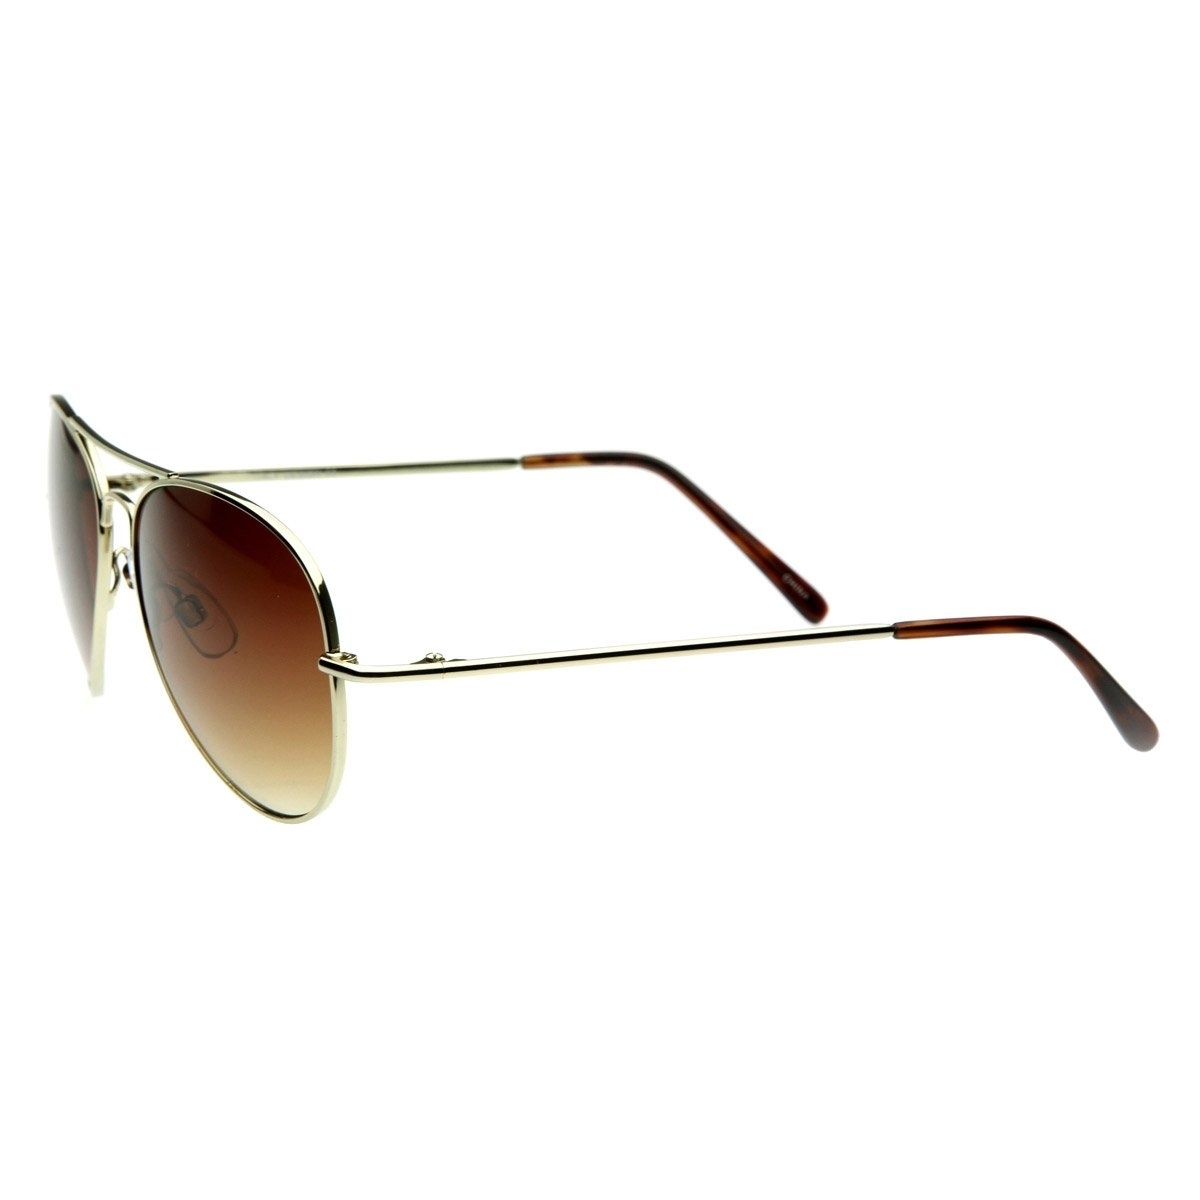 Small Classic Aviator Sunglasses 50mm Aviators - Silver